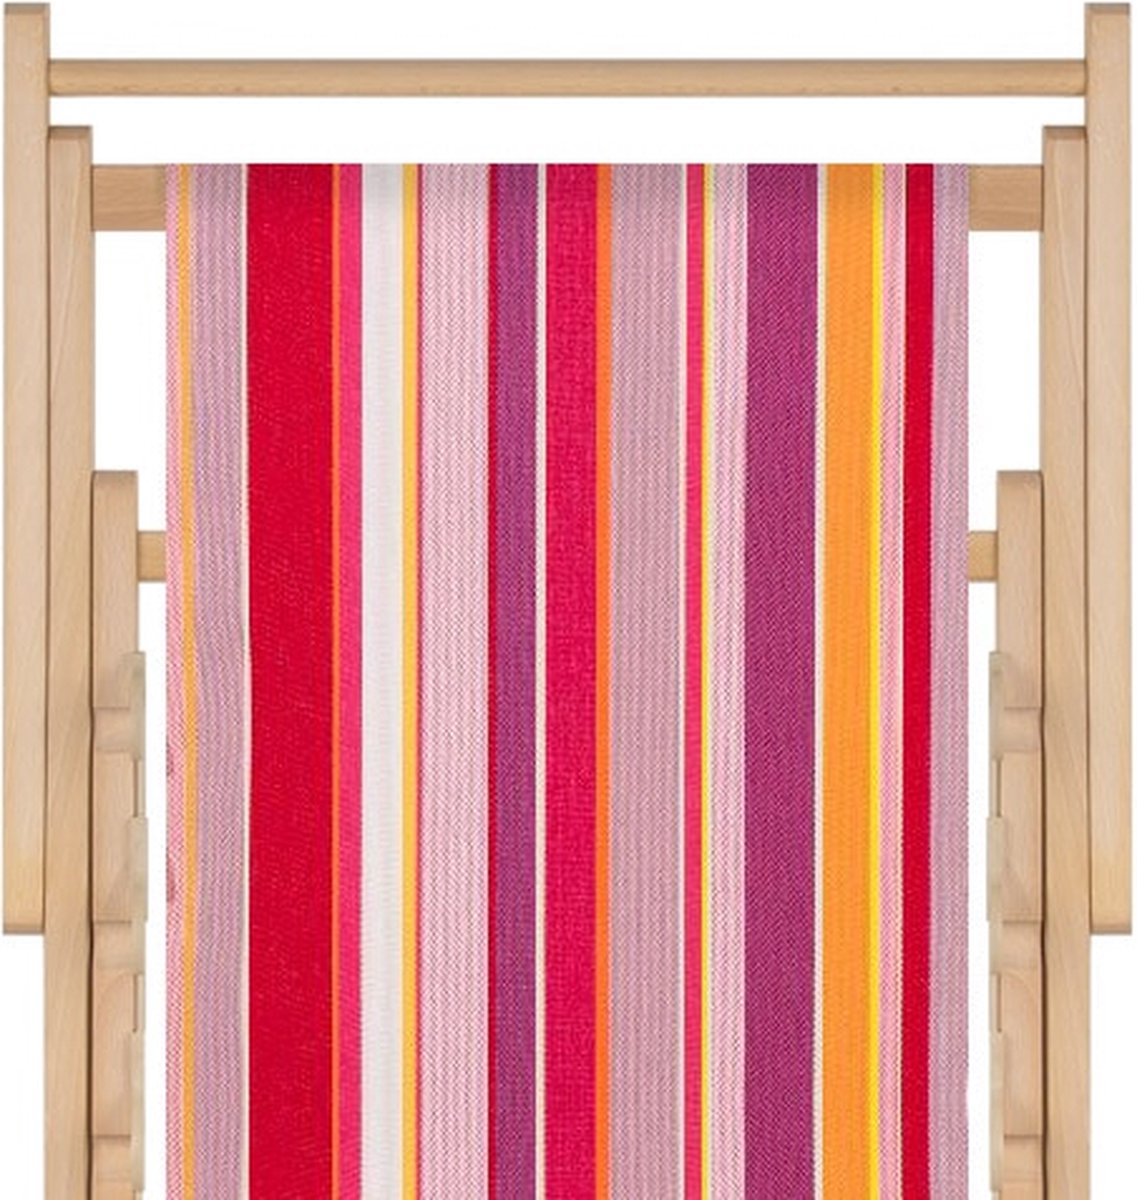 Strandstoel.net Houten strandstoel met hoogwaardige stof in katoen - massief beukehout - dubbelgeweven katoen Jaipur - opvouwbaar - verstelbaar in 3 standen - zonder armleuning - afneembare hoes - multicolour - strepenpatroon